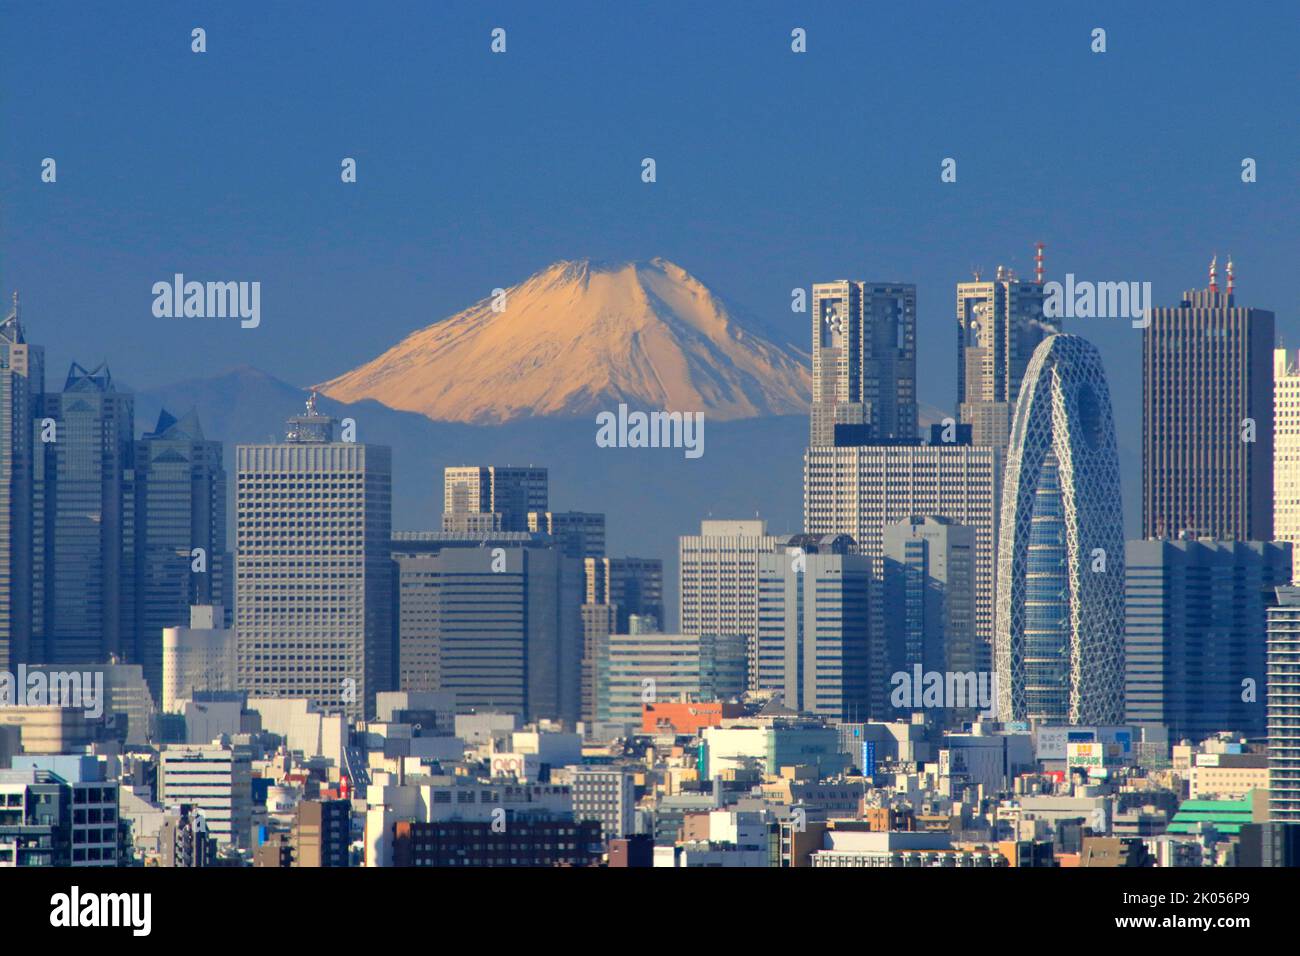 Mt Fuji and Shinjuku skyscrapers Tokyo Japan Stock Photo